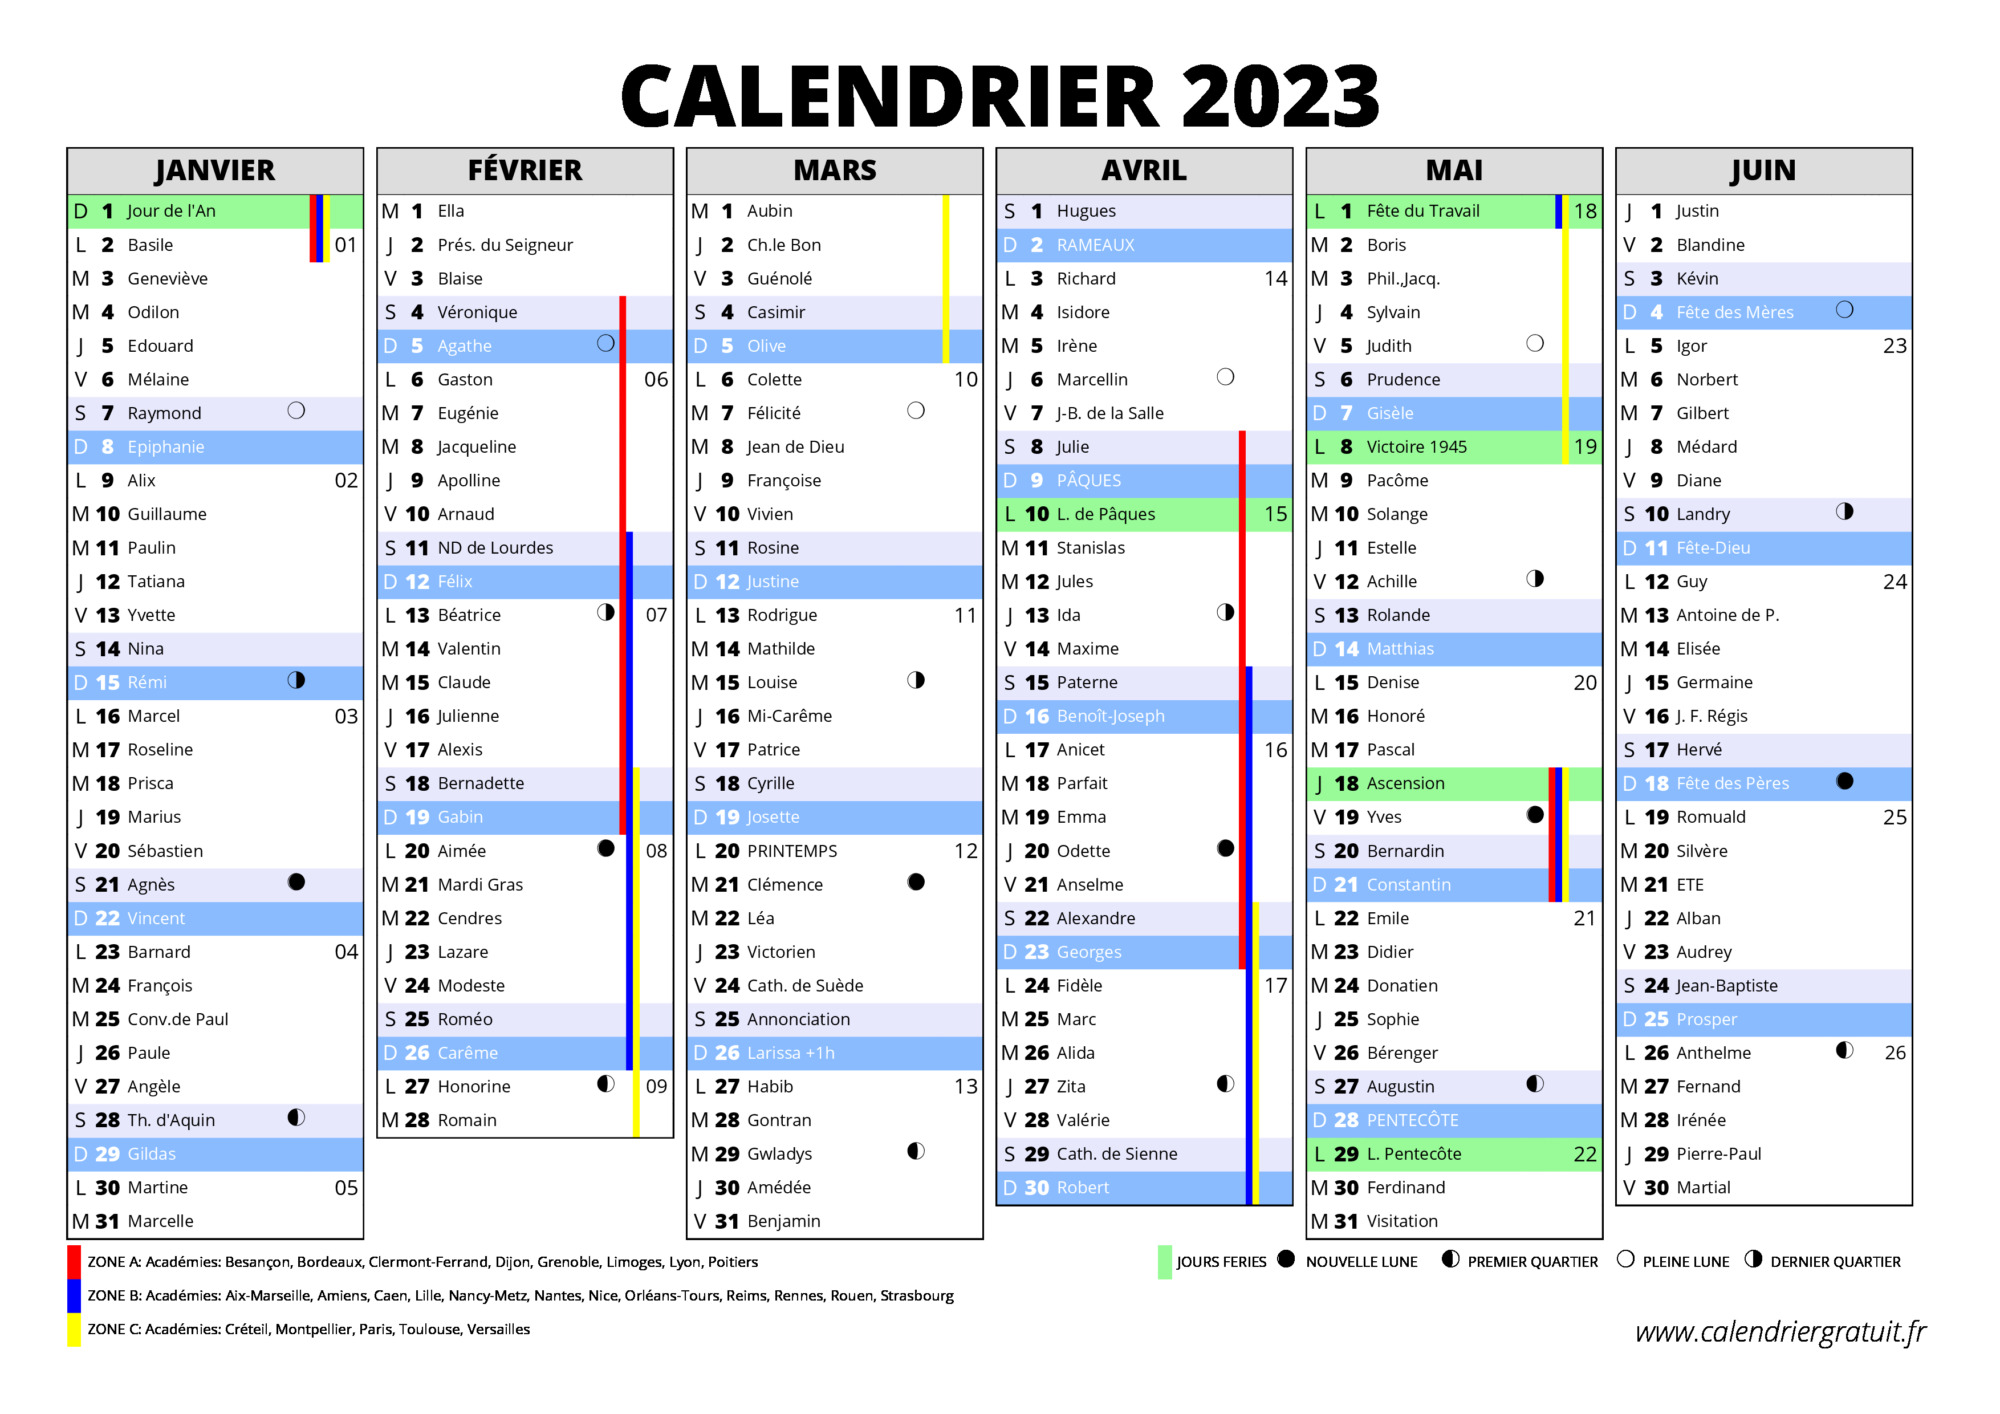 Dates De Vacances 2023 Get Calendrier 2023 Update Home Interior Design